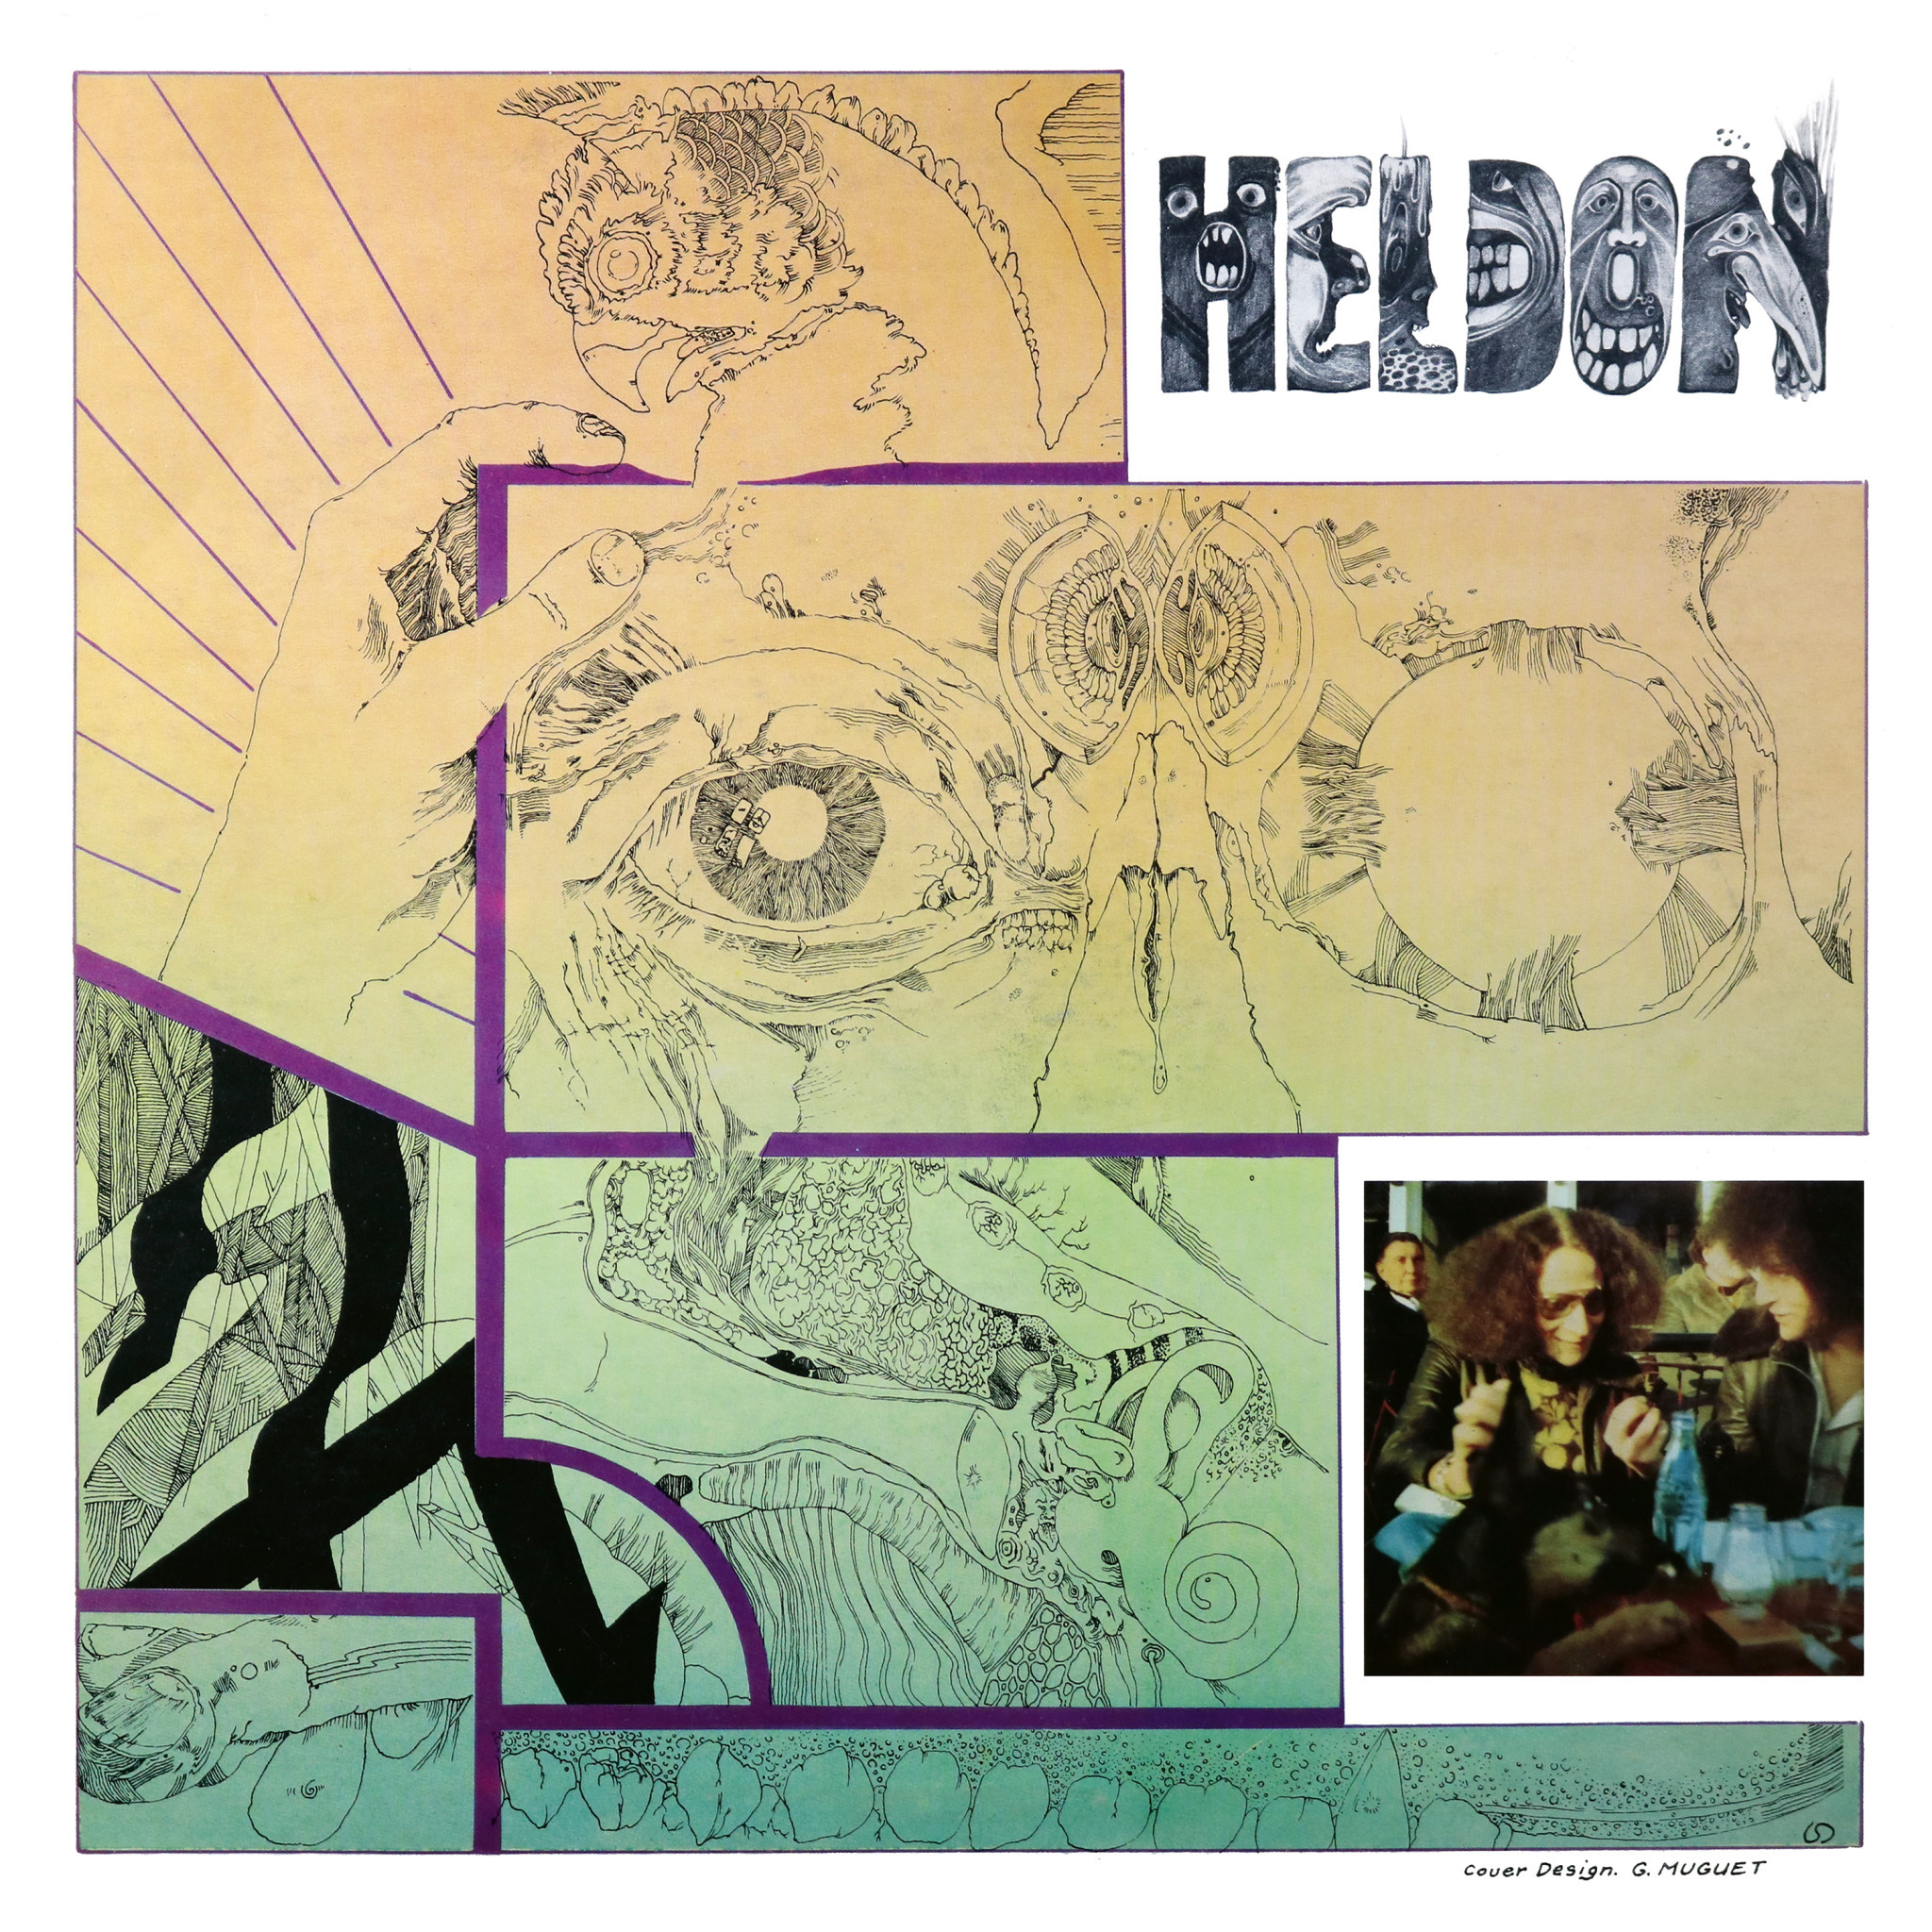 Bureau B Heldon - Electronique Guerilla (Heldon I) (Blue Vinyl)